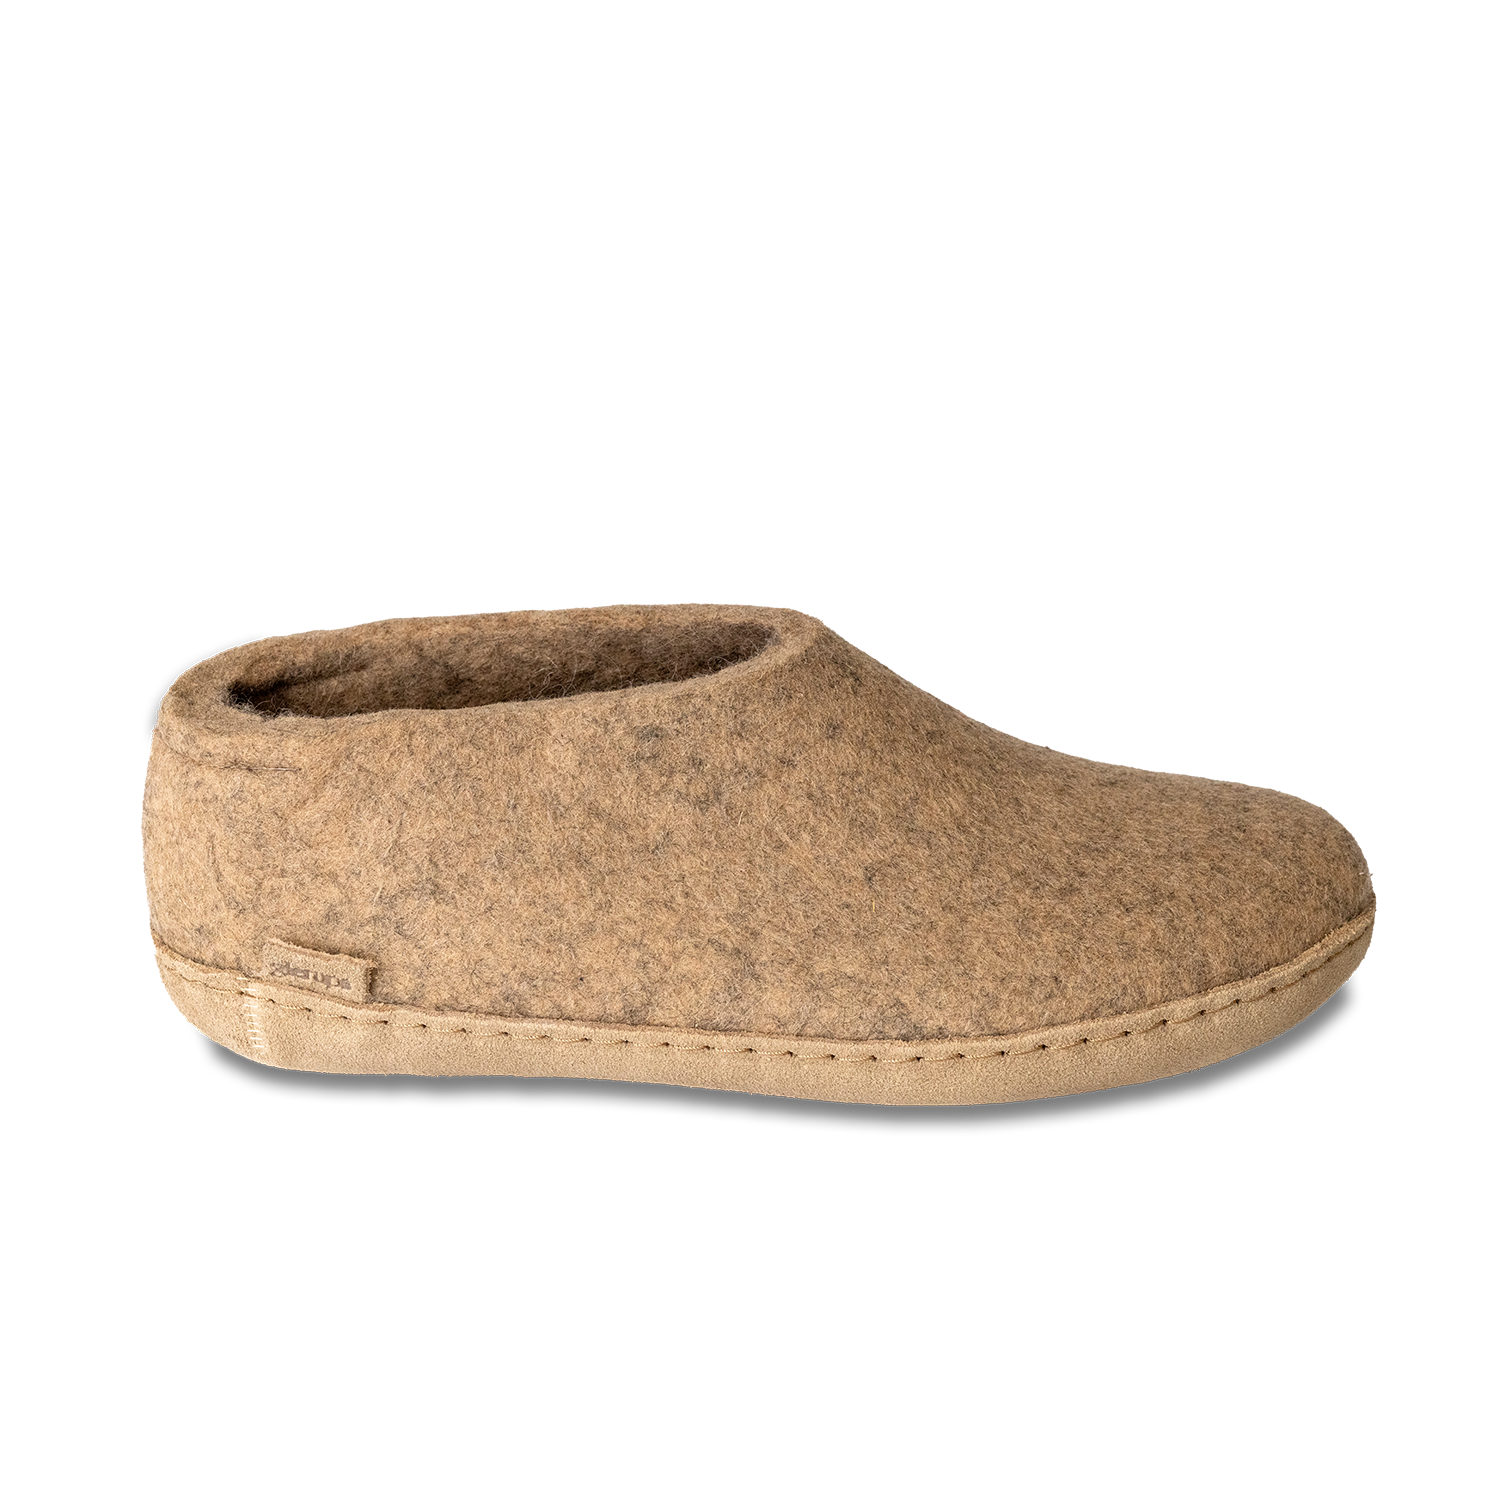 Glerups Shoe Sand - Leather Sole